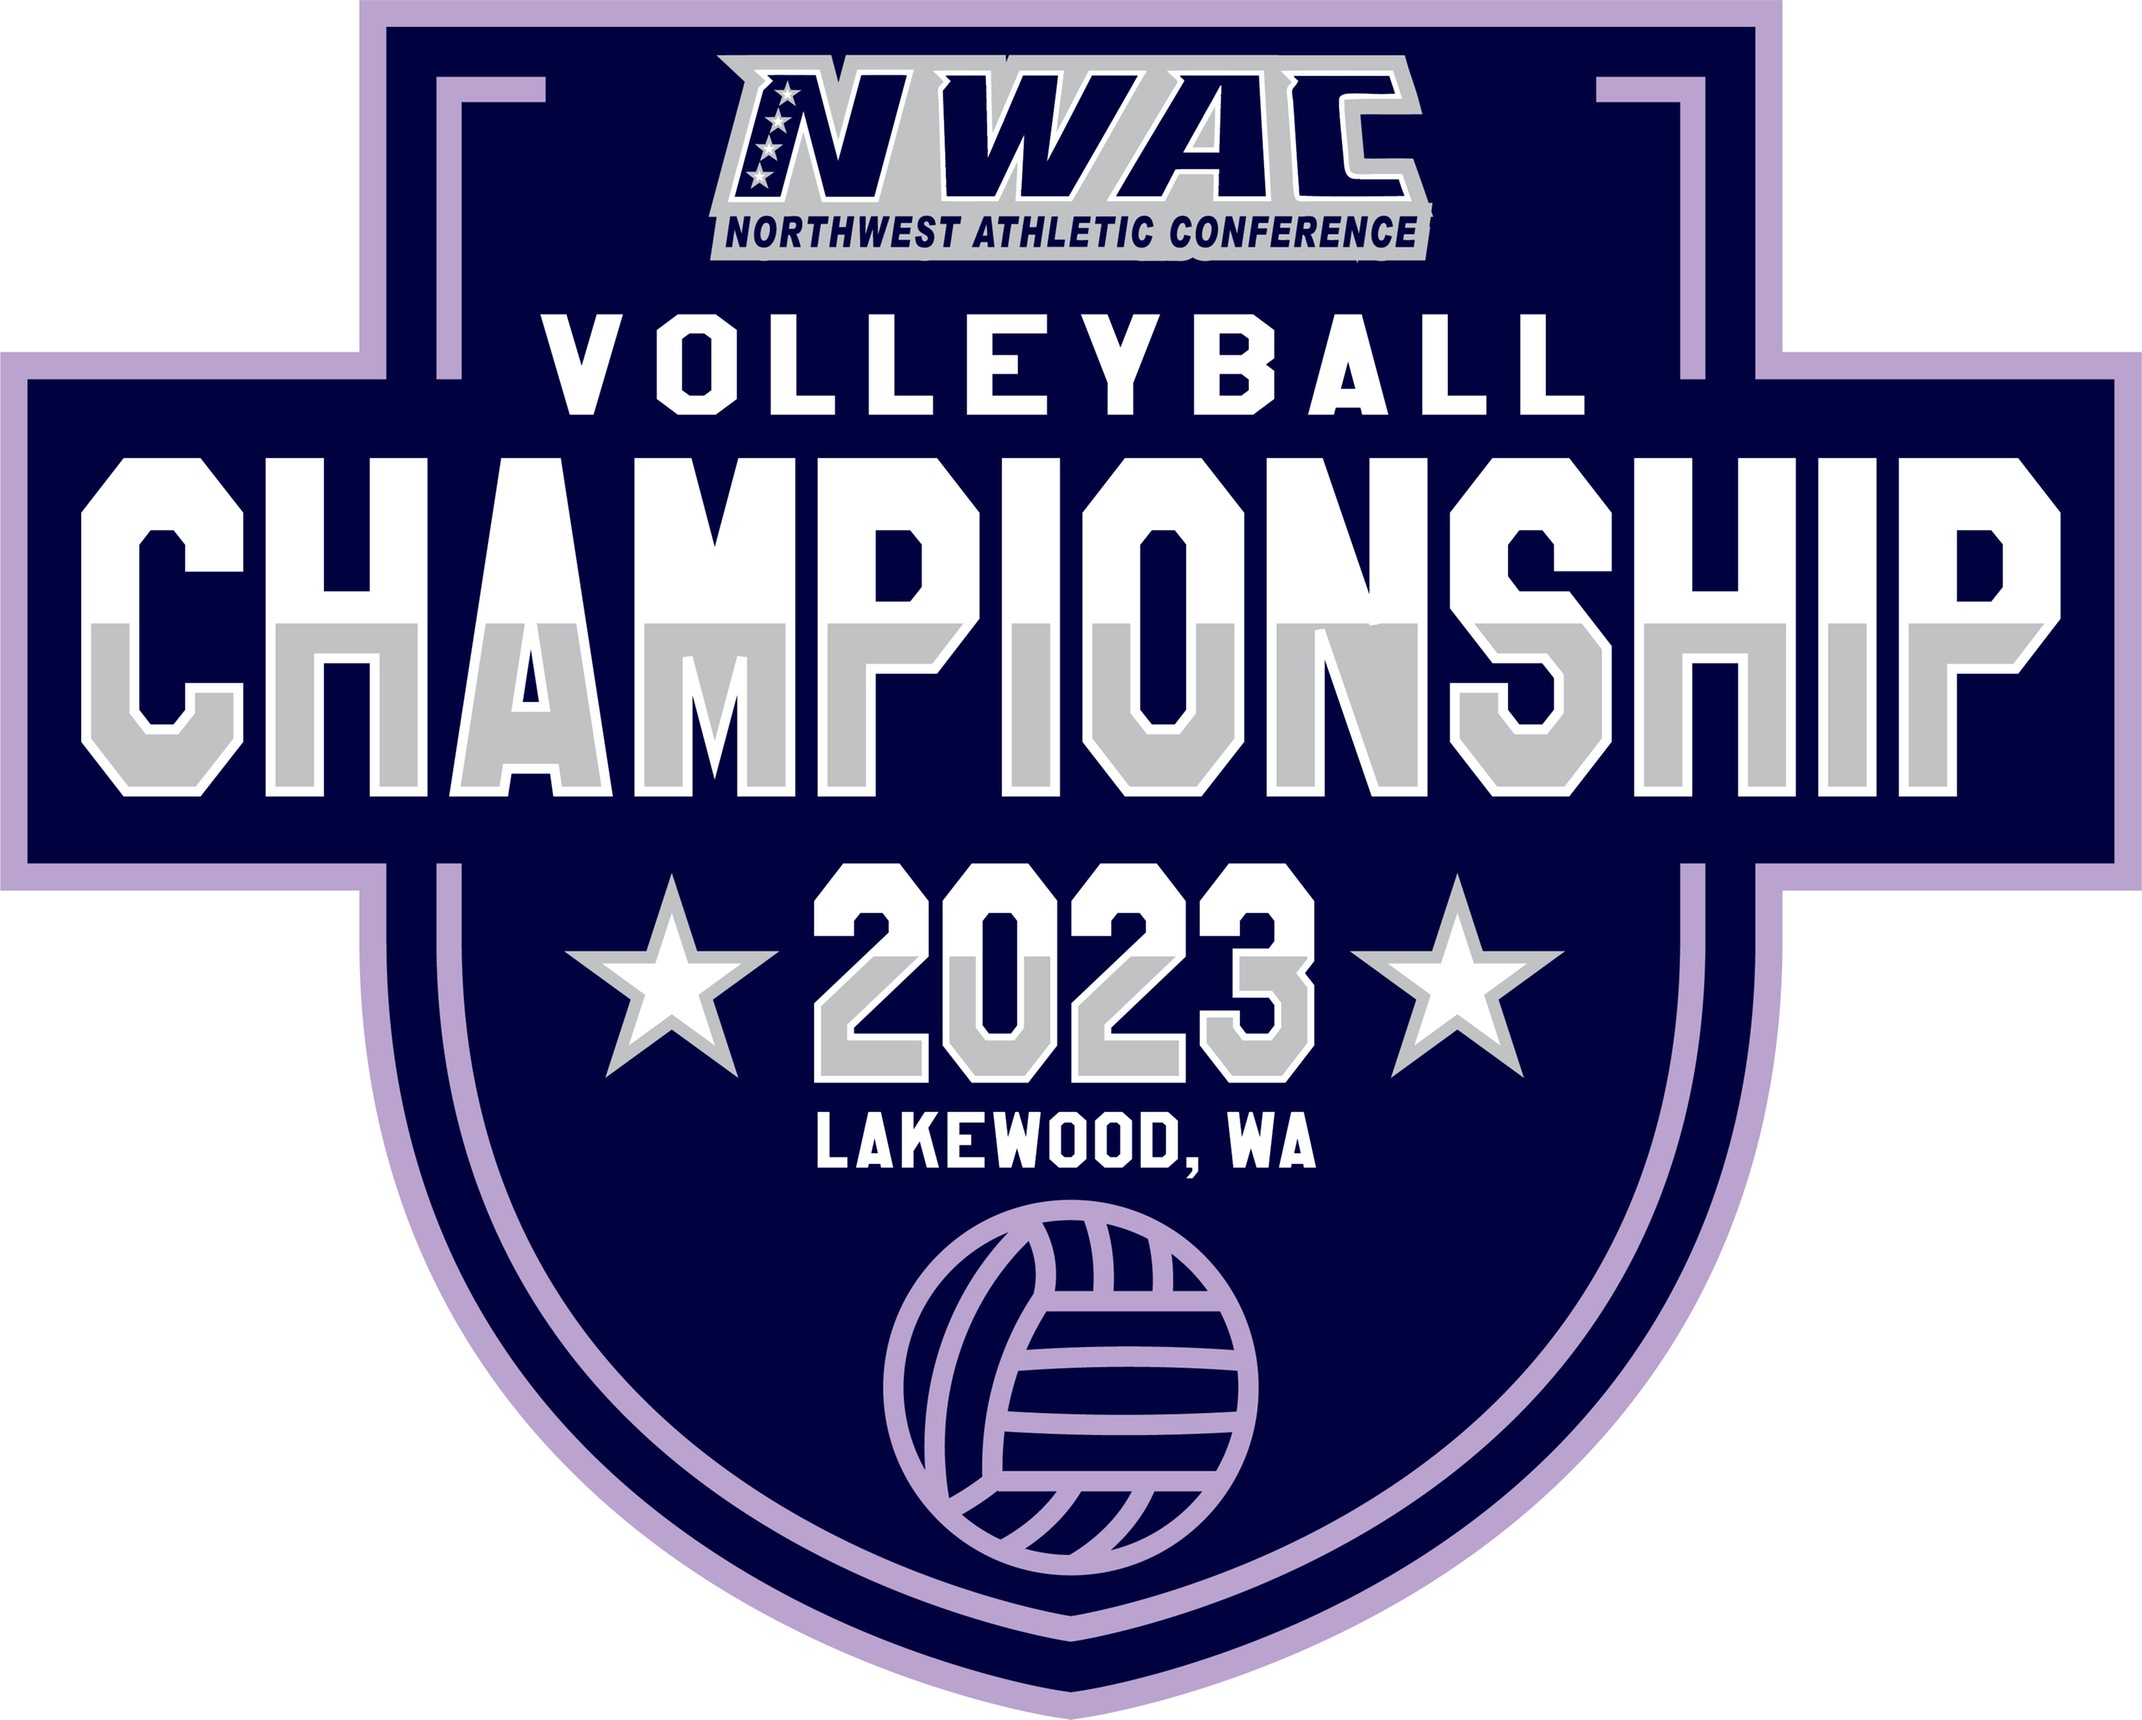 2023 NWAC Volleyball Championship logo